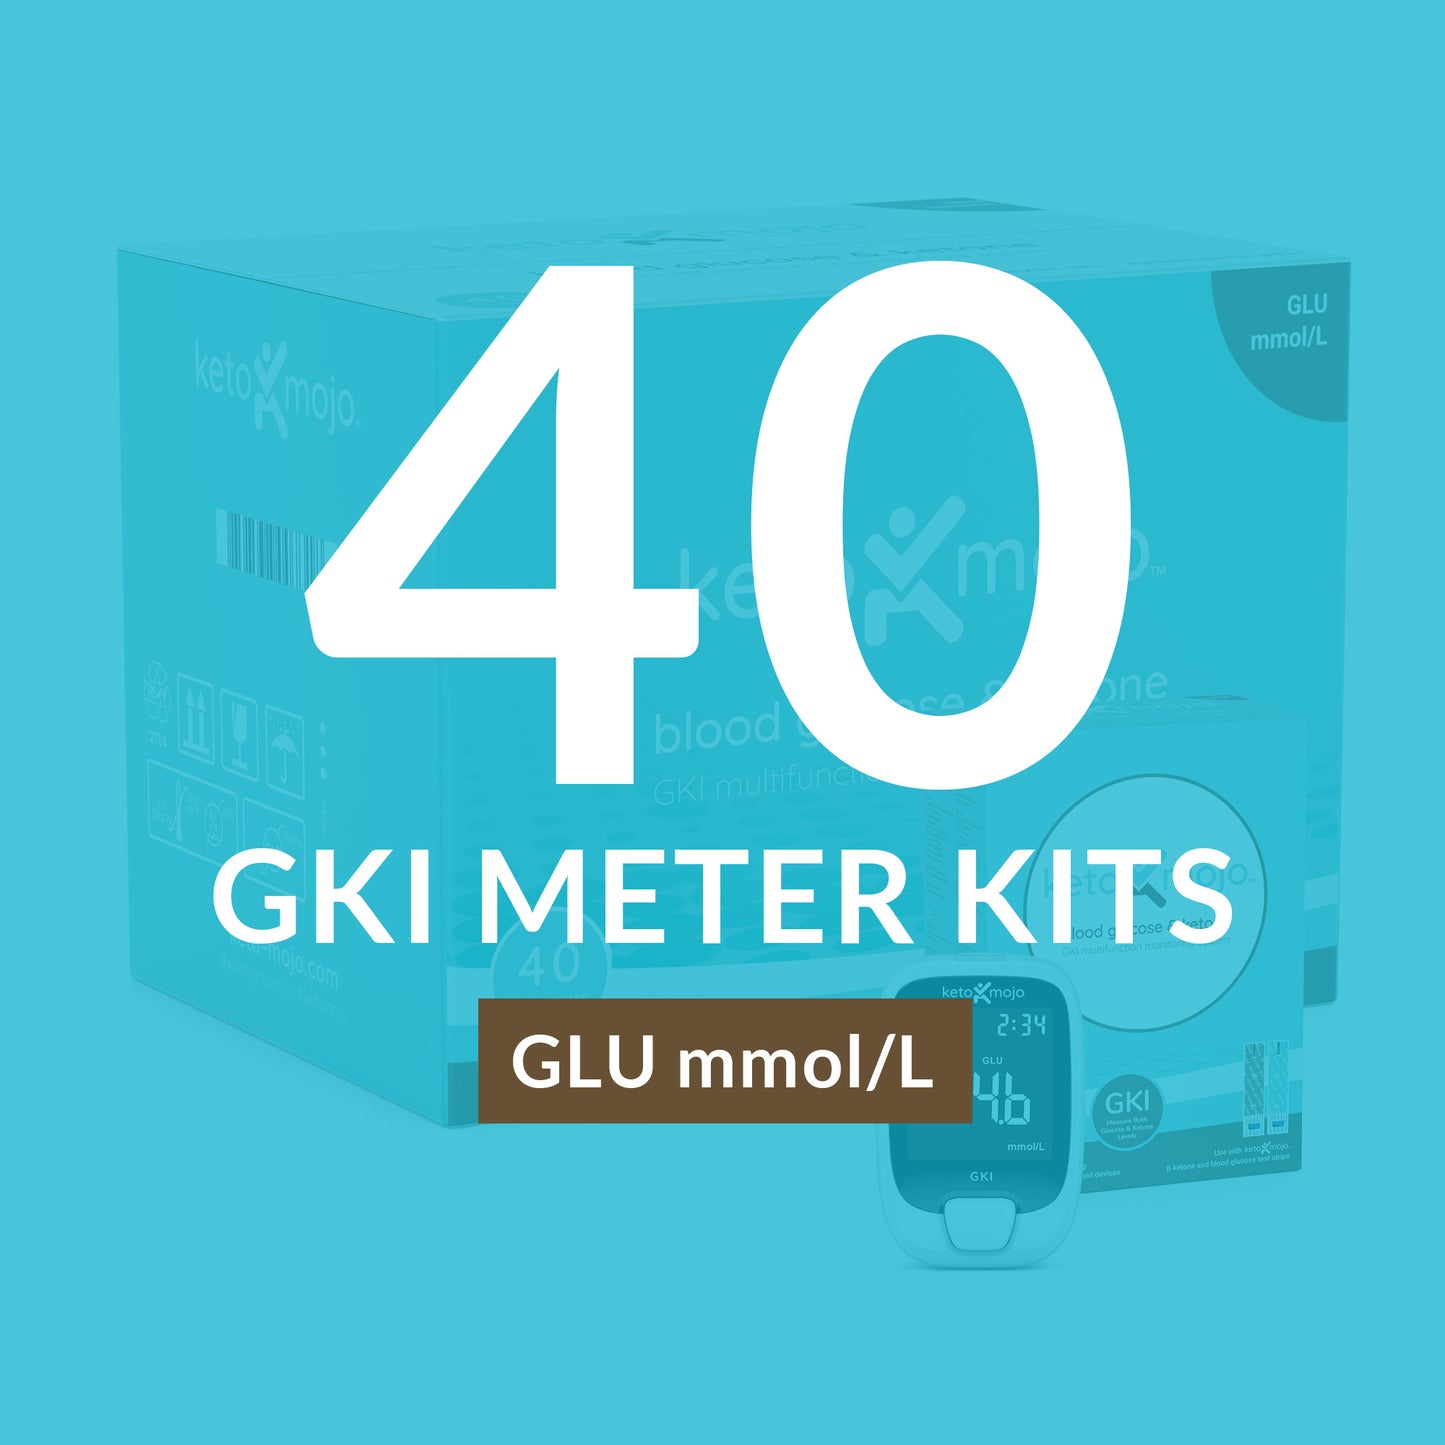 Mastercase GKI-Bluetooth Meter - BASIC STARTER KIT (40 pack) mg/dL